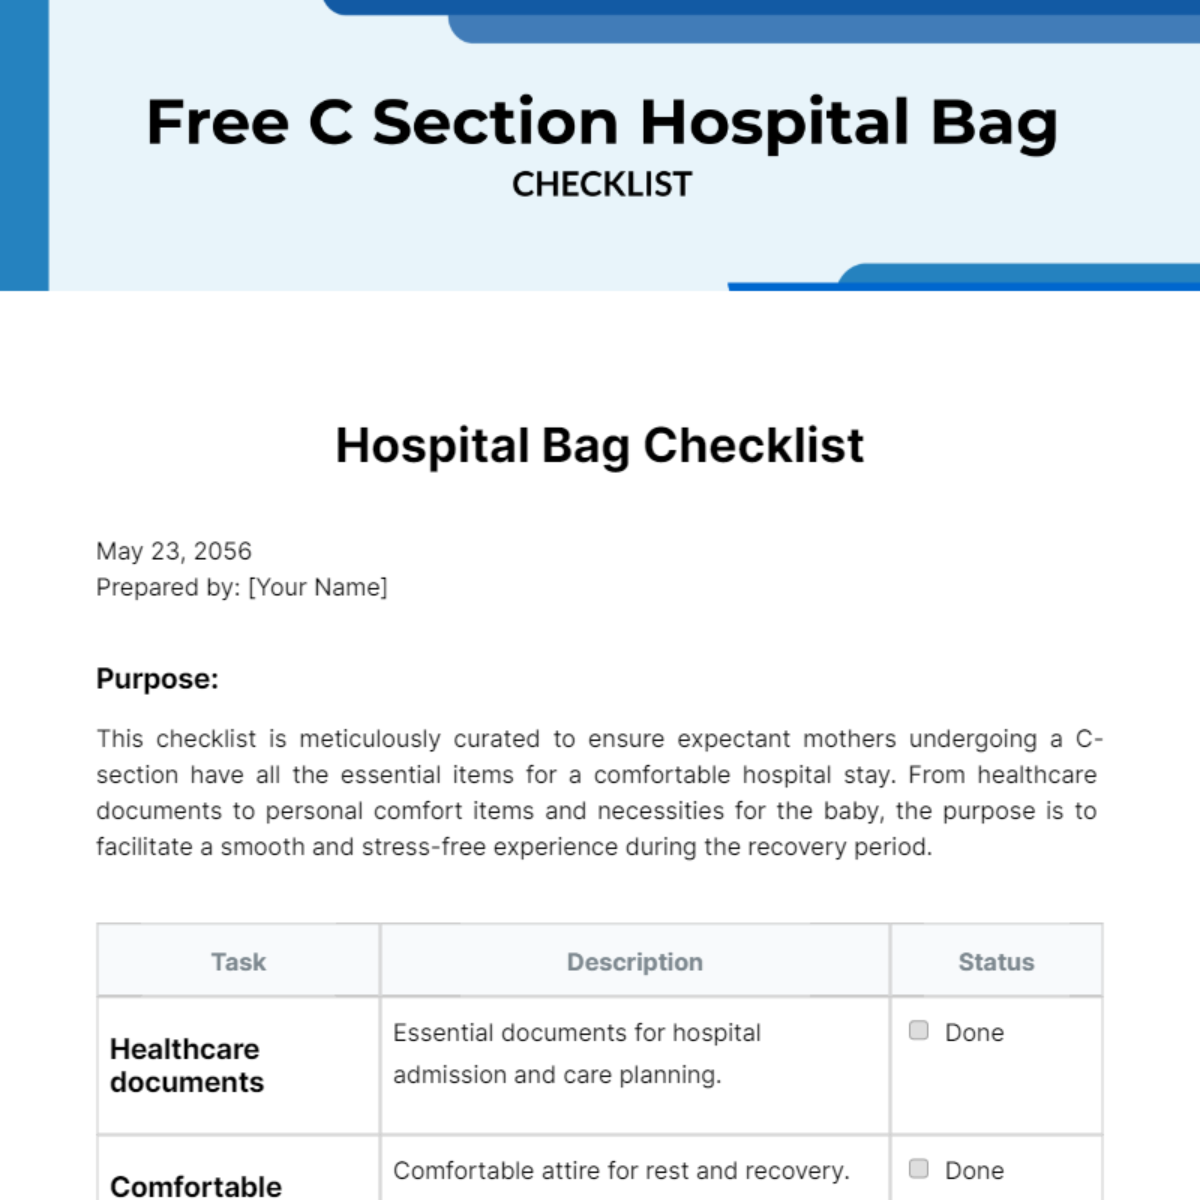 8 C-Section Hospital Essentials (FREE C-Section Hospital Bag